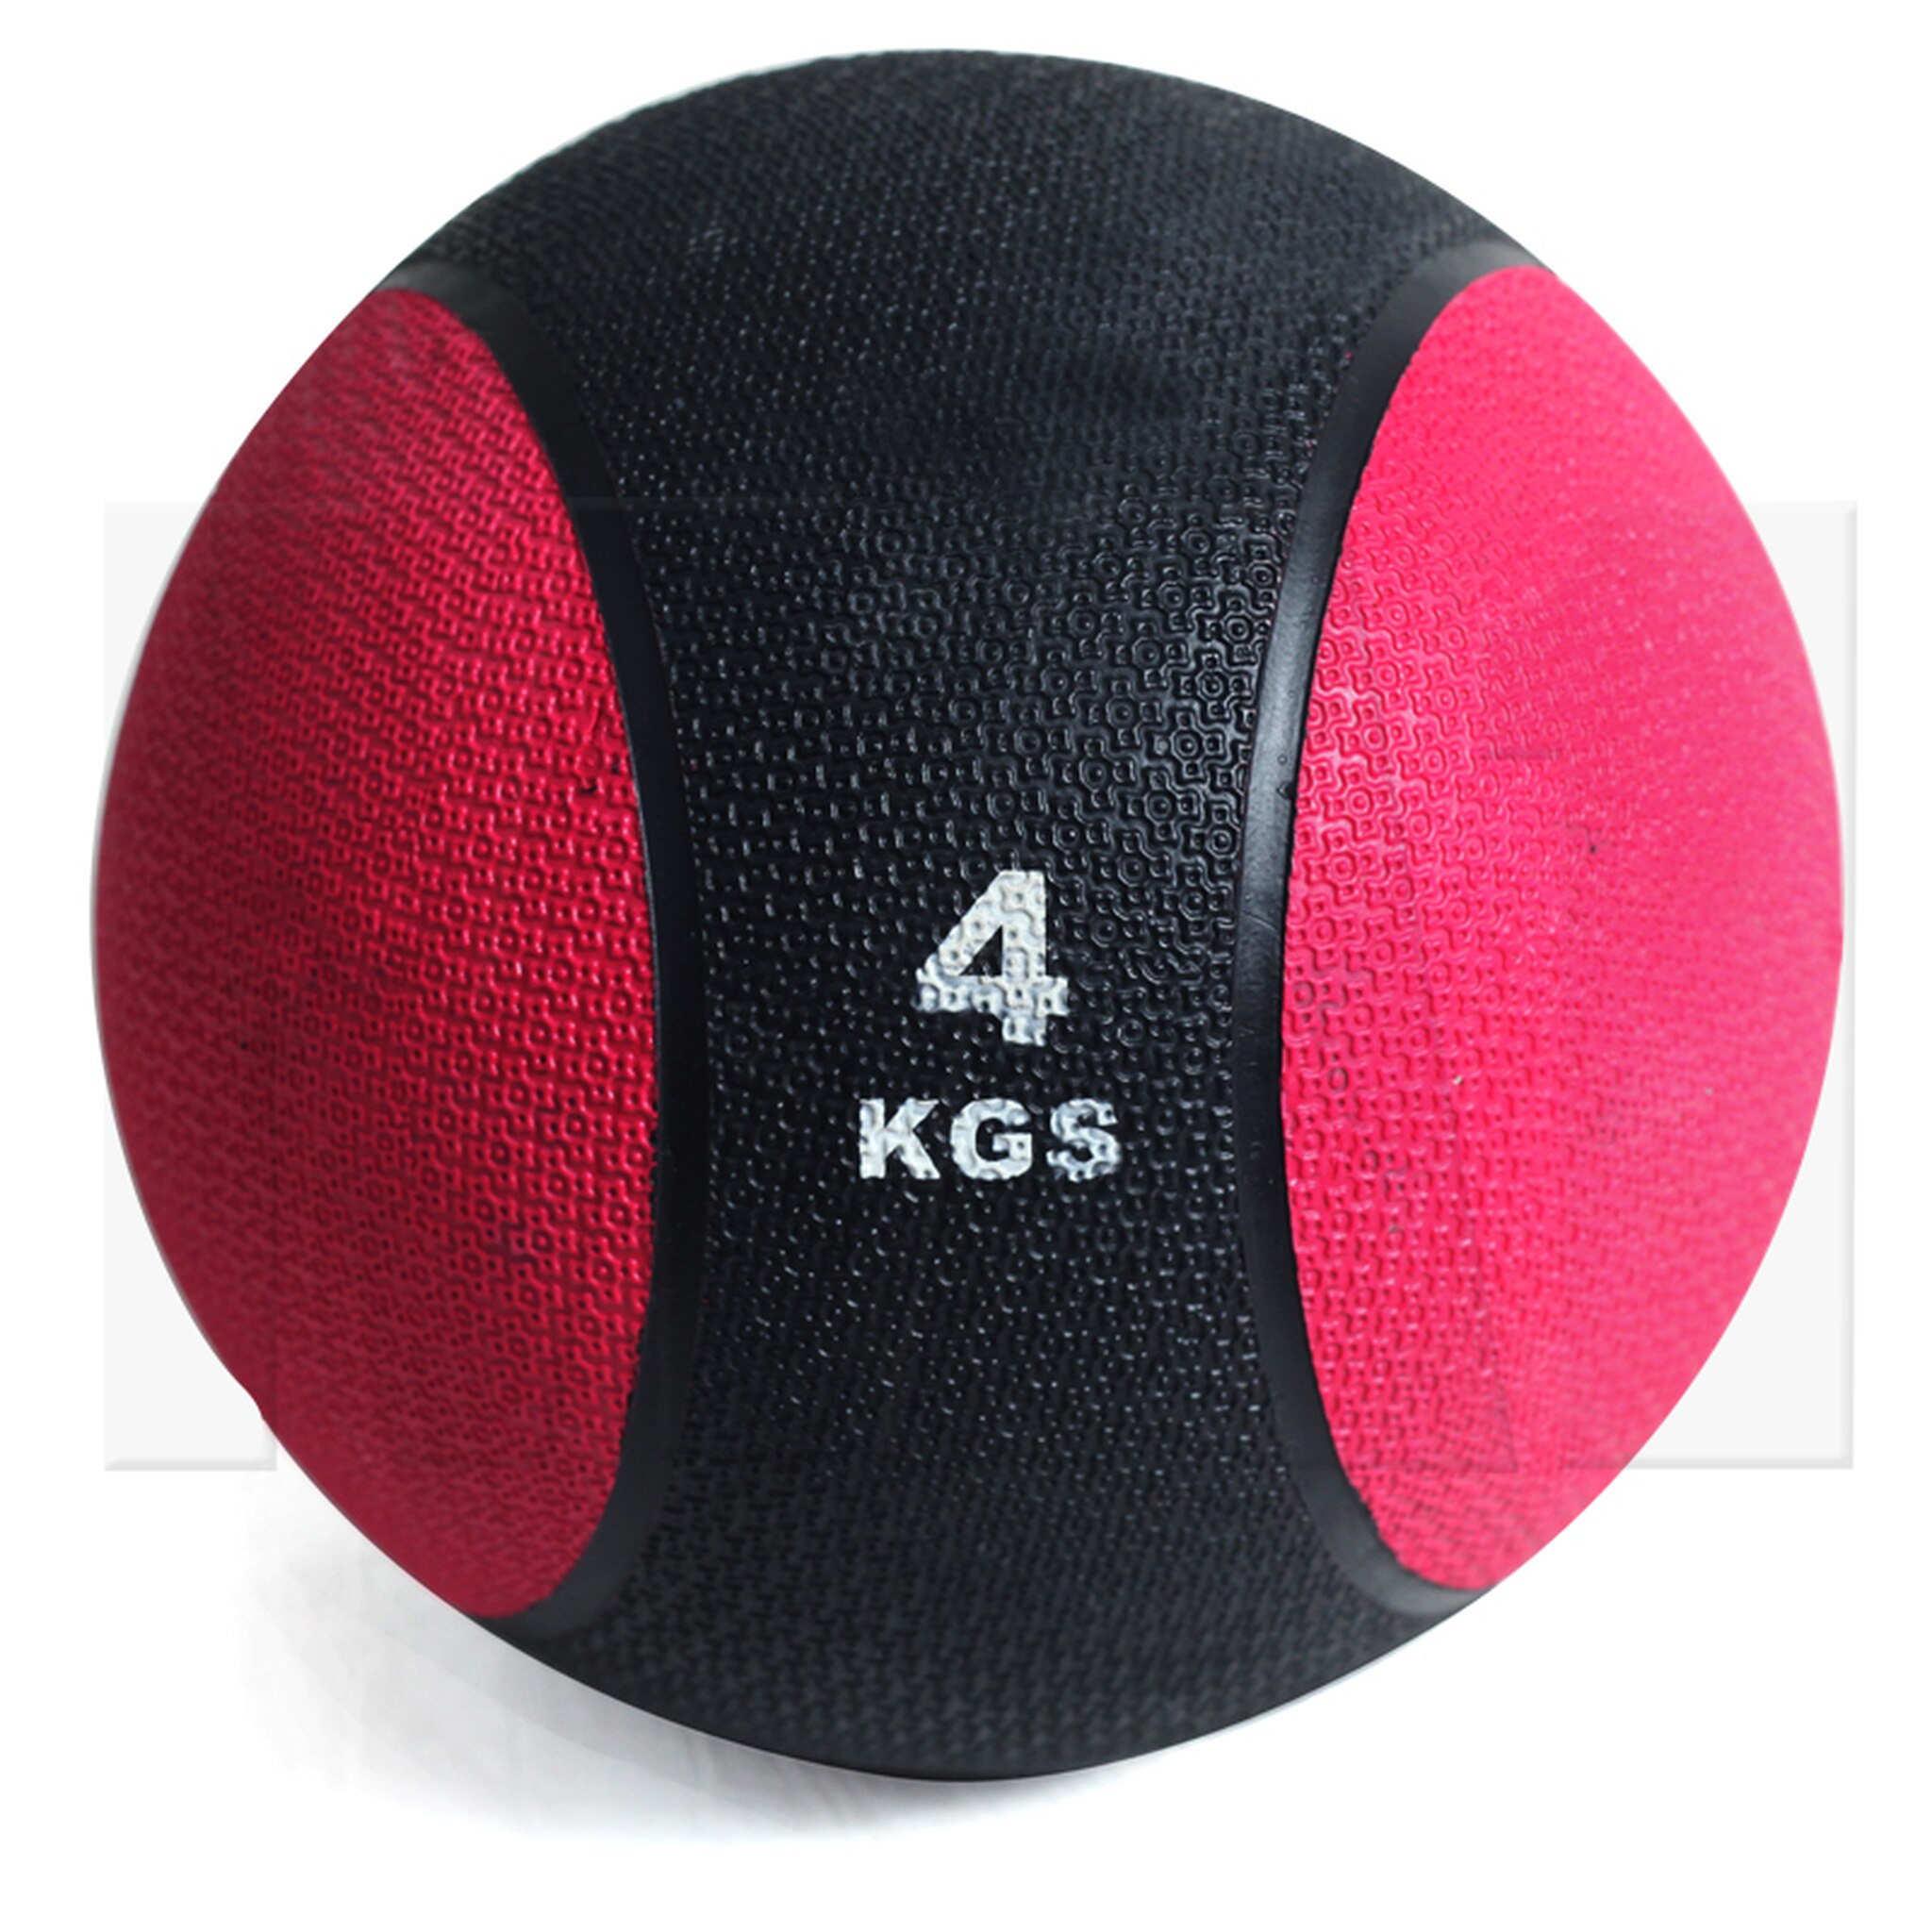 Rubber Medicine Ball 4Kg